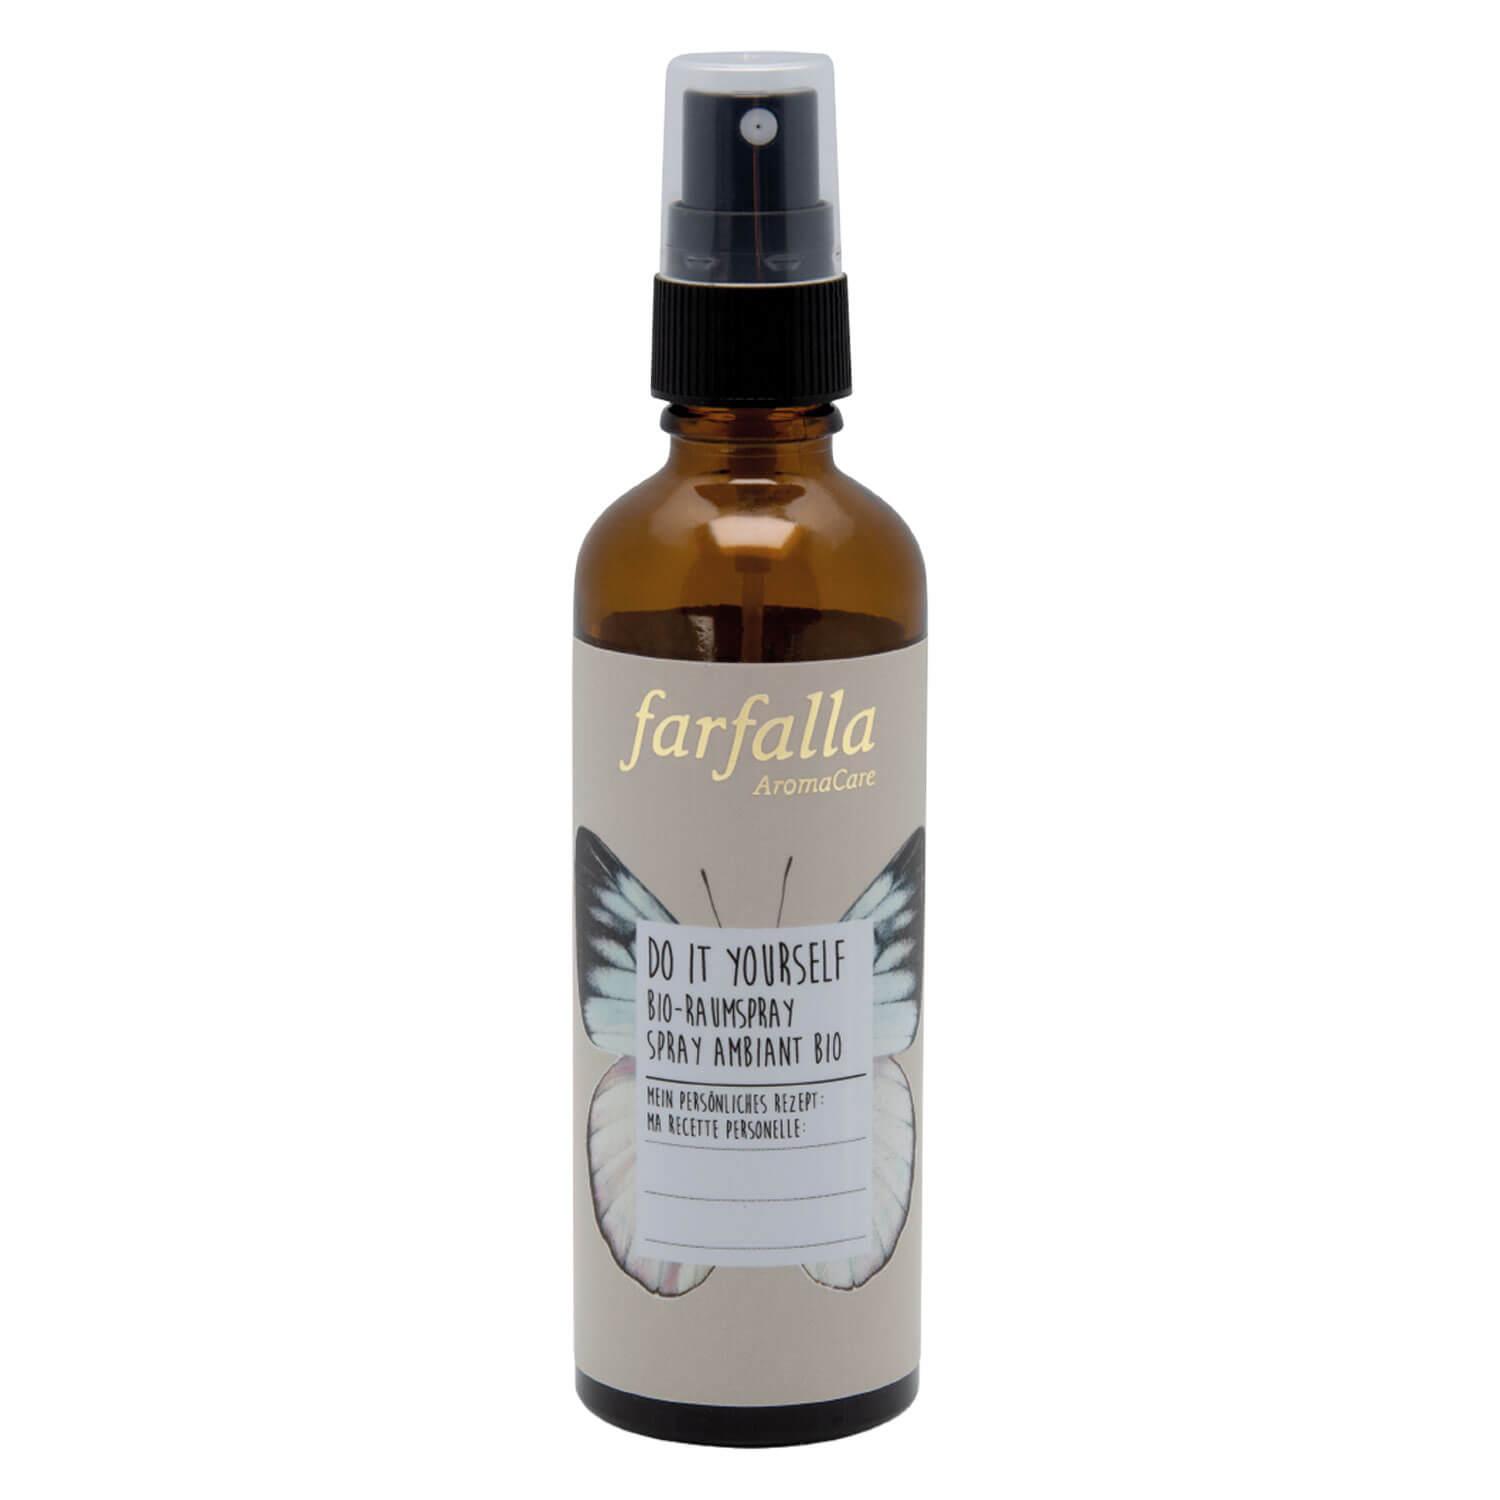 Farfalla Do it yourself - Spray ambiant bio